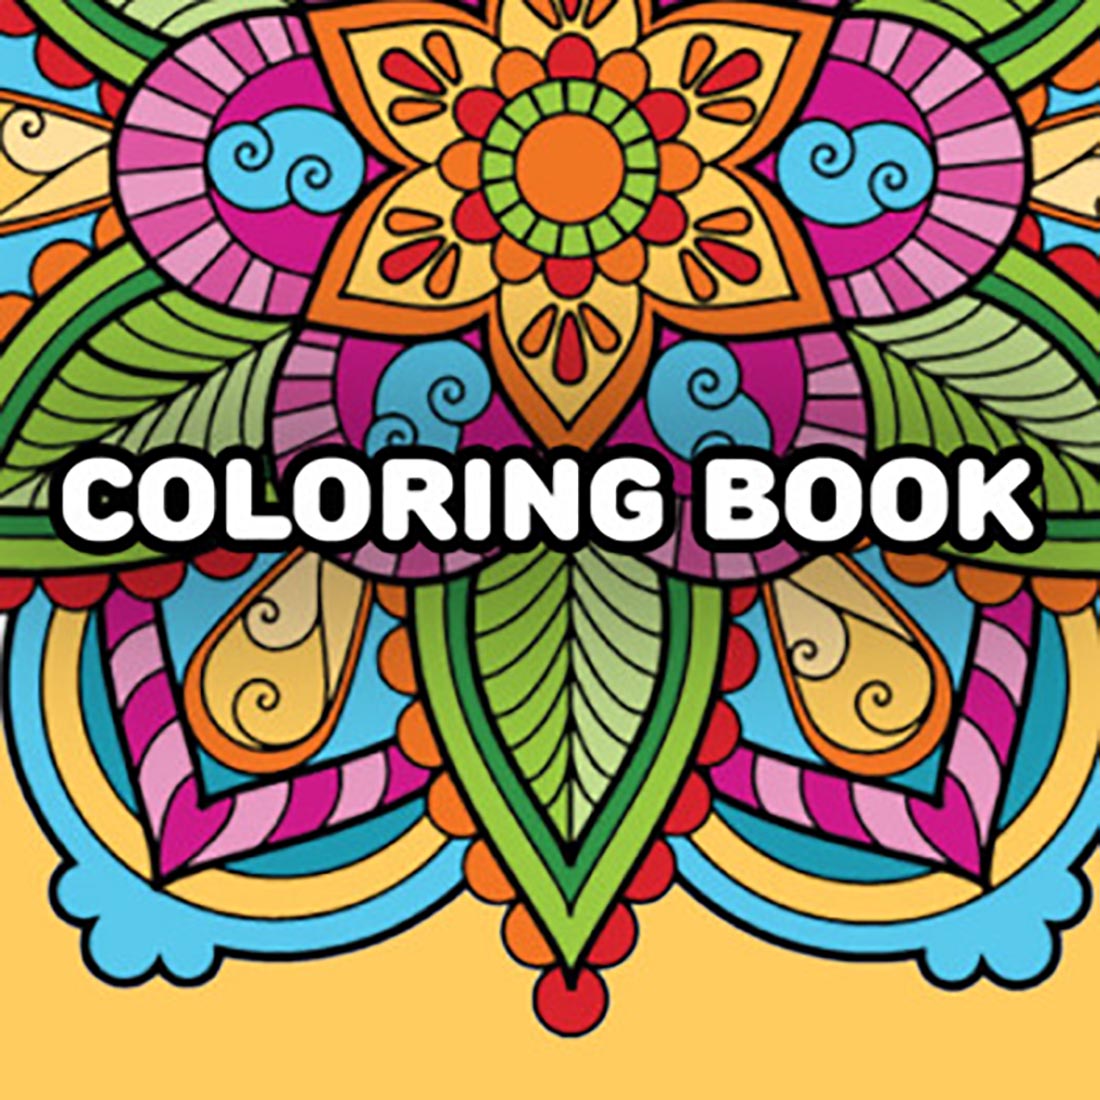 Print and Go - 20 Diwali Mandala Coloring Pages - Coloring Book cover image.